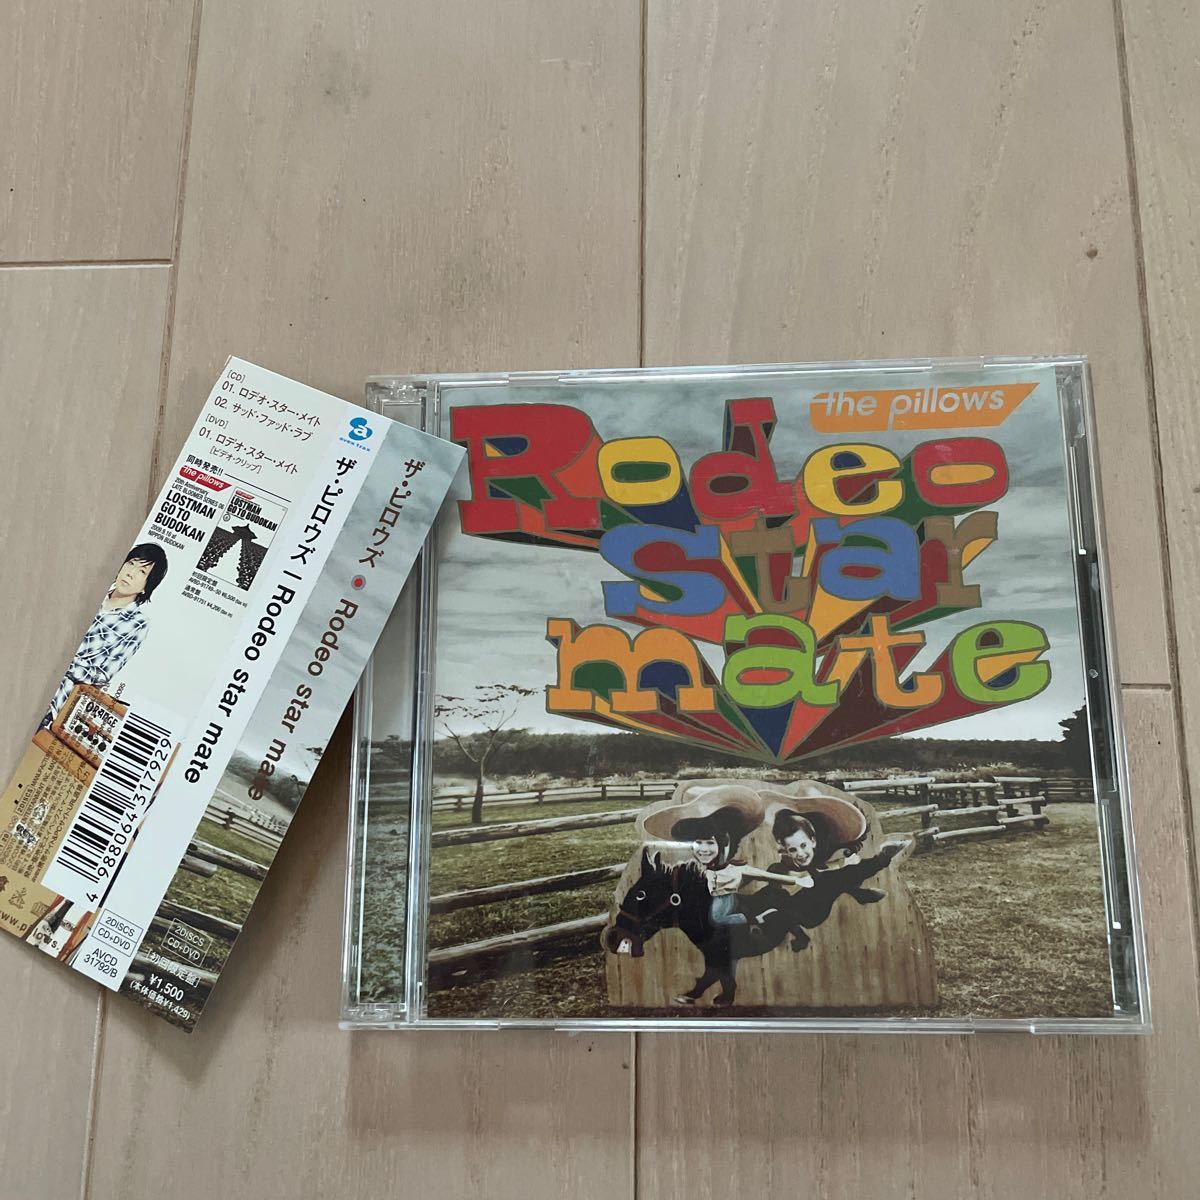 CD pillows/Rodeo star mate 初回限定盤 DVD付 [エイベックス]